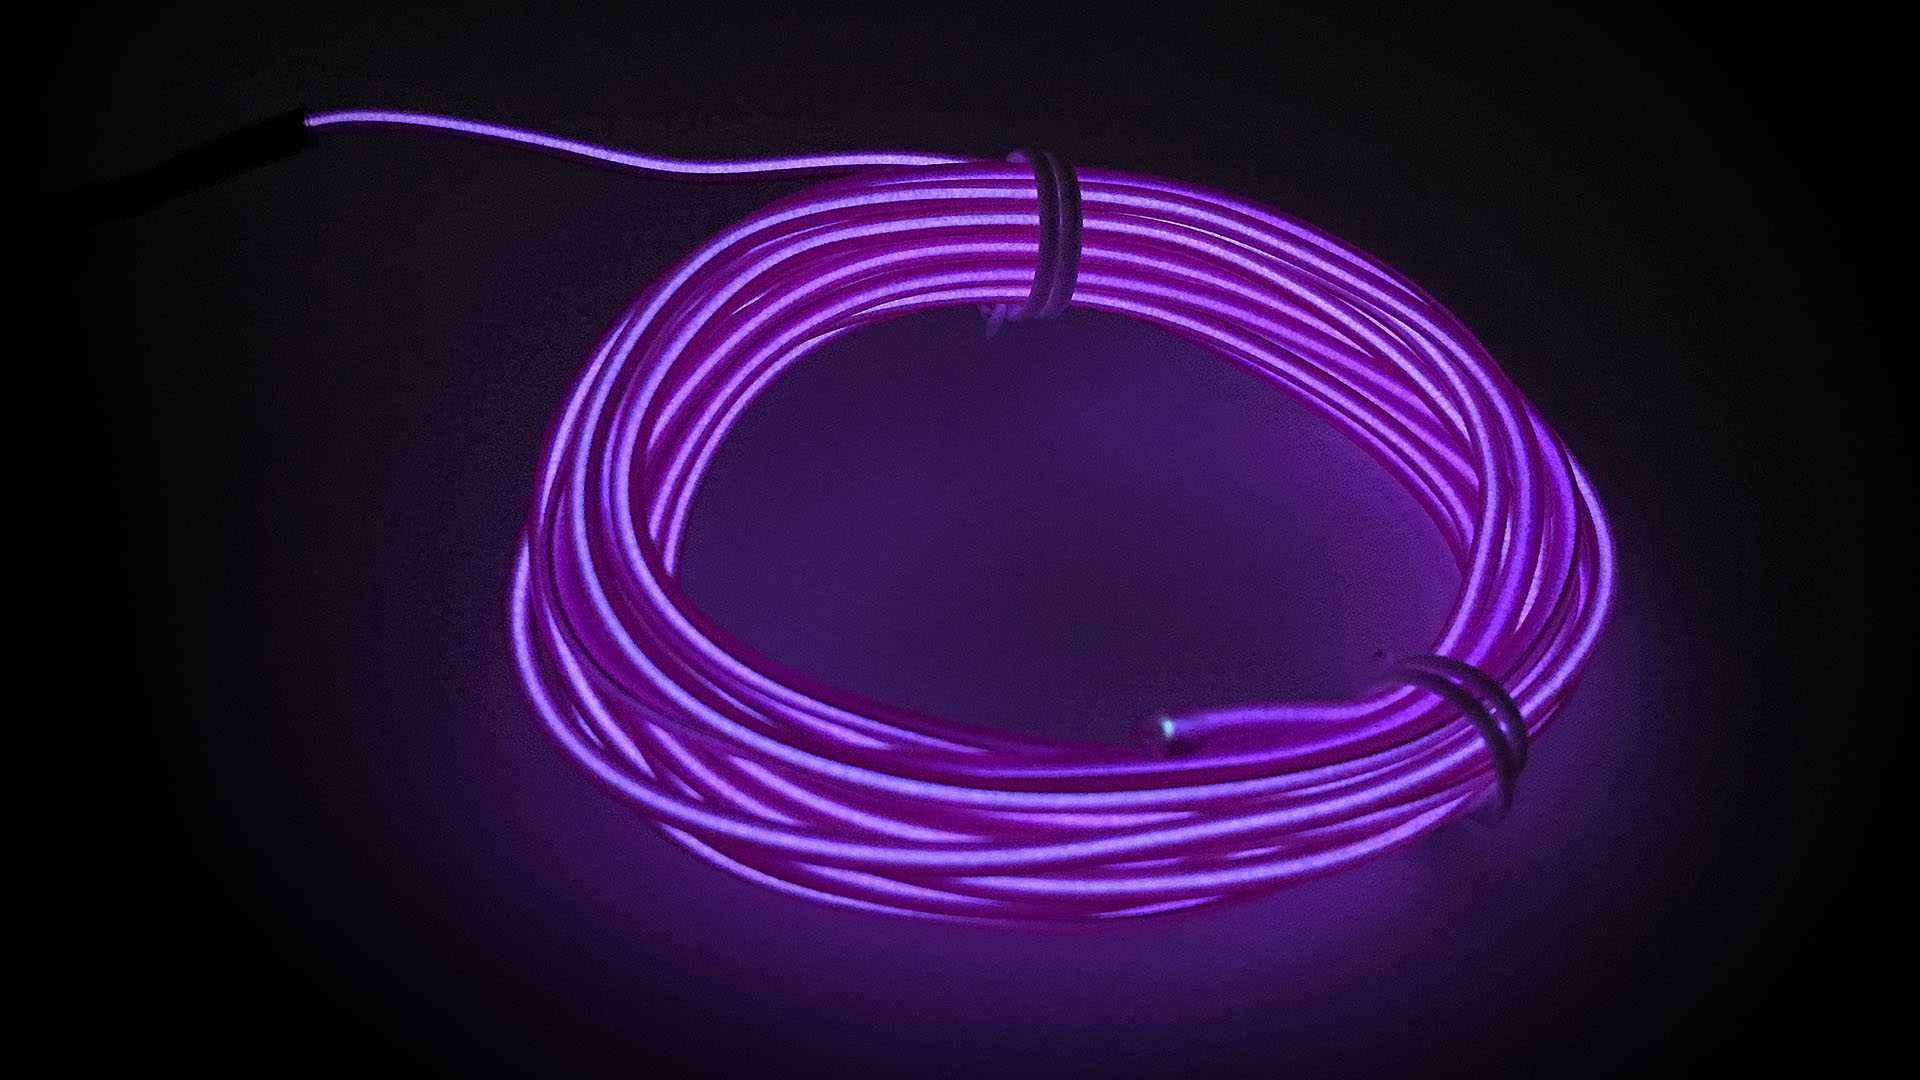 Nettigo: ELWIRA Soft El Wire 2.3 mm x 3m, with connector, purple [Elwira]